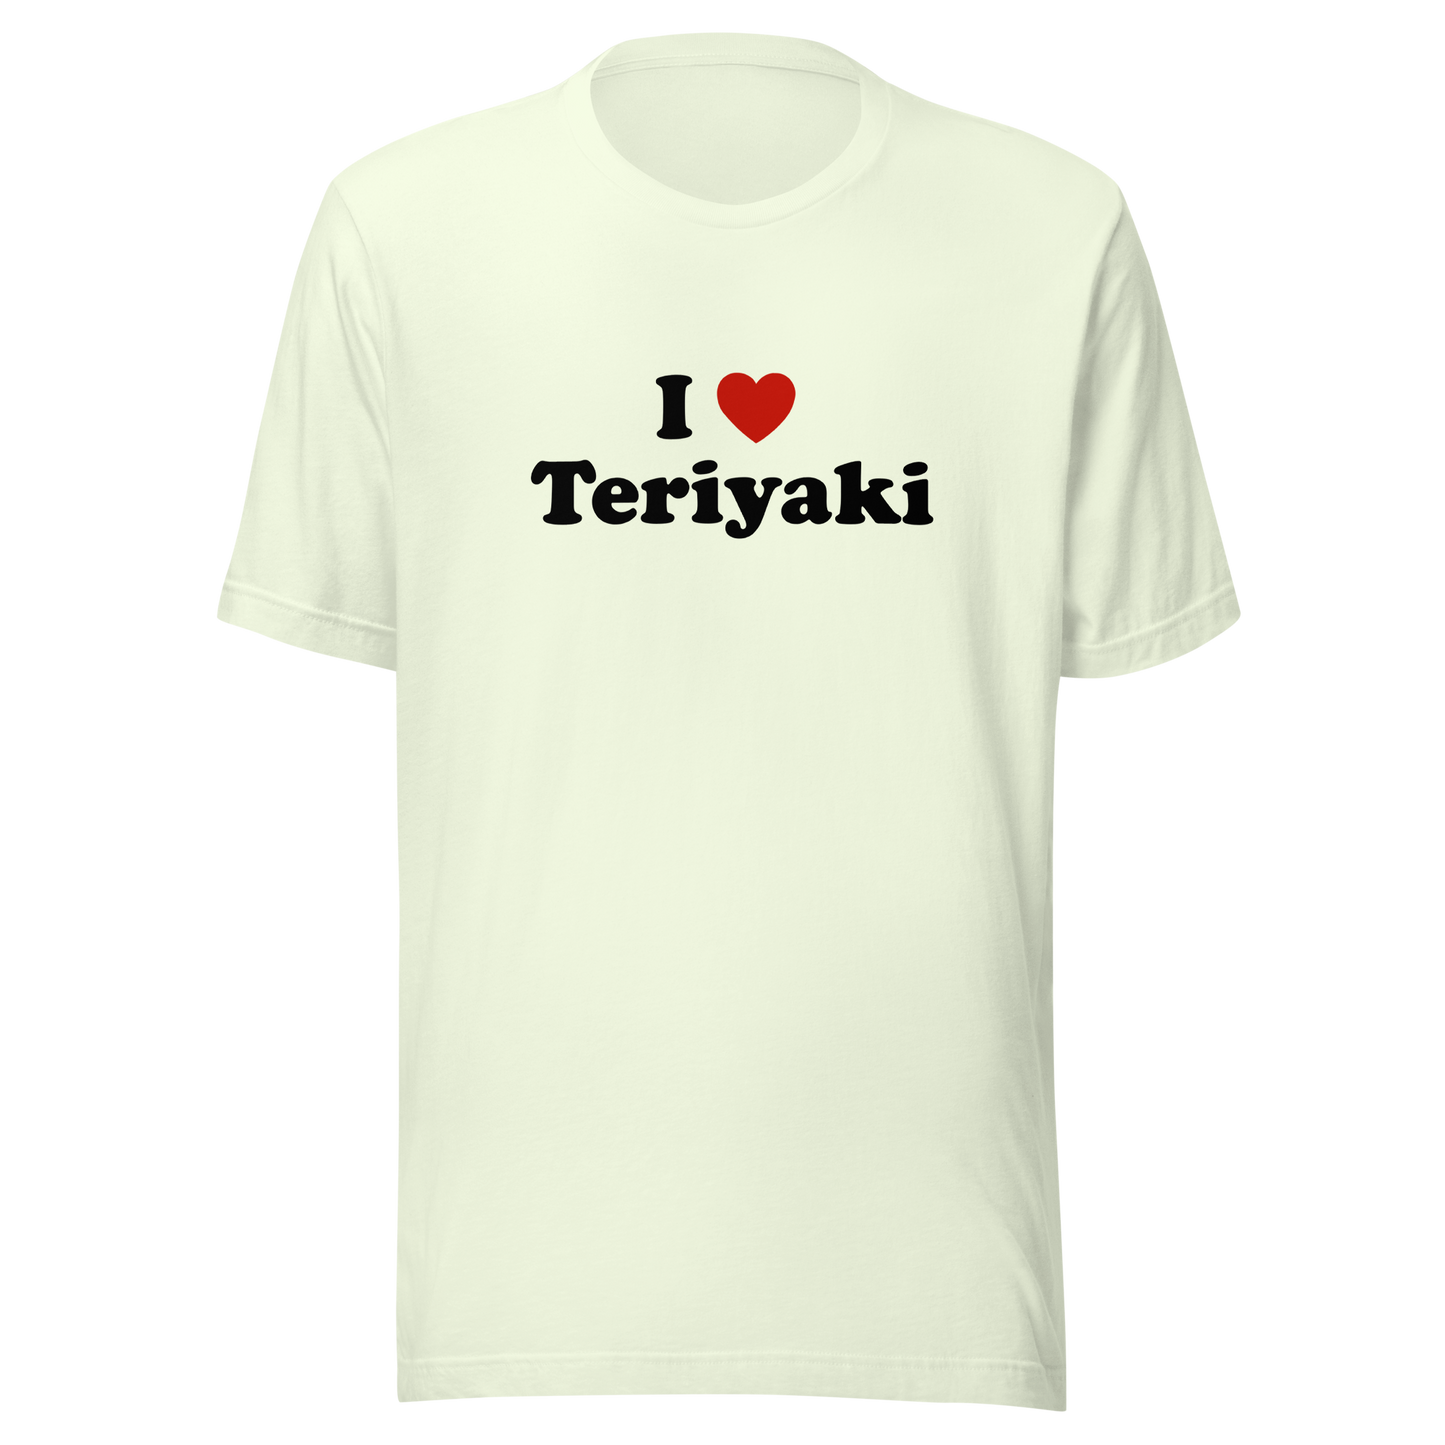 I heart Teriyaki! t-shirt